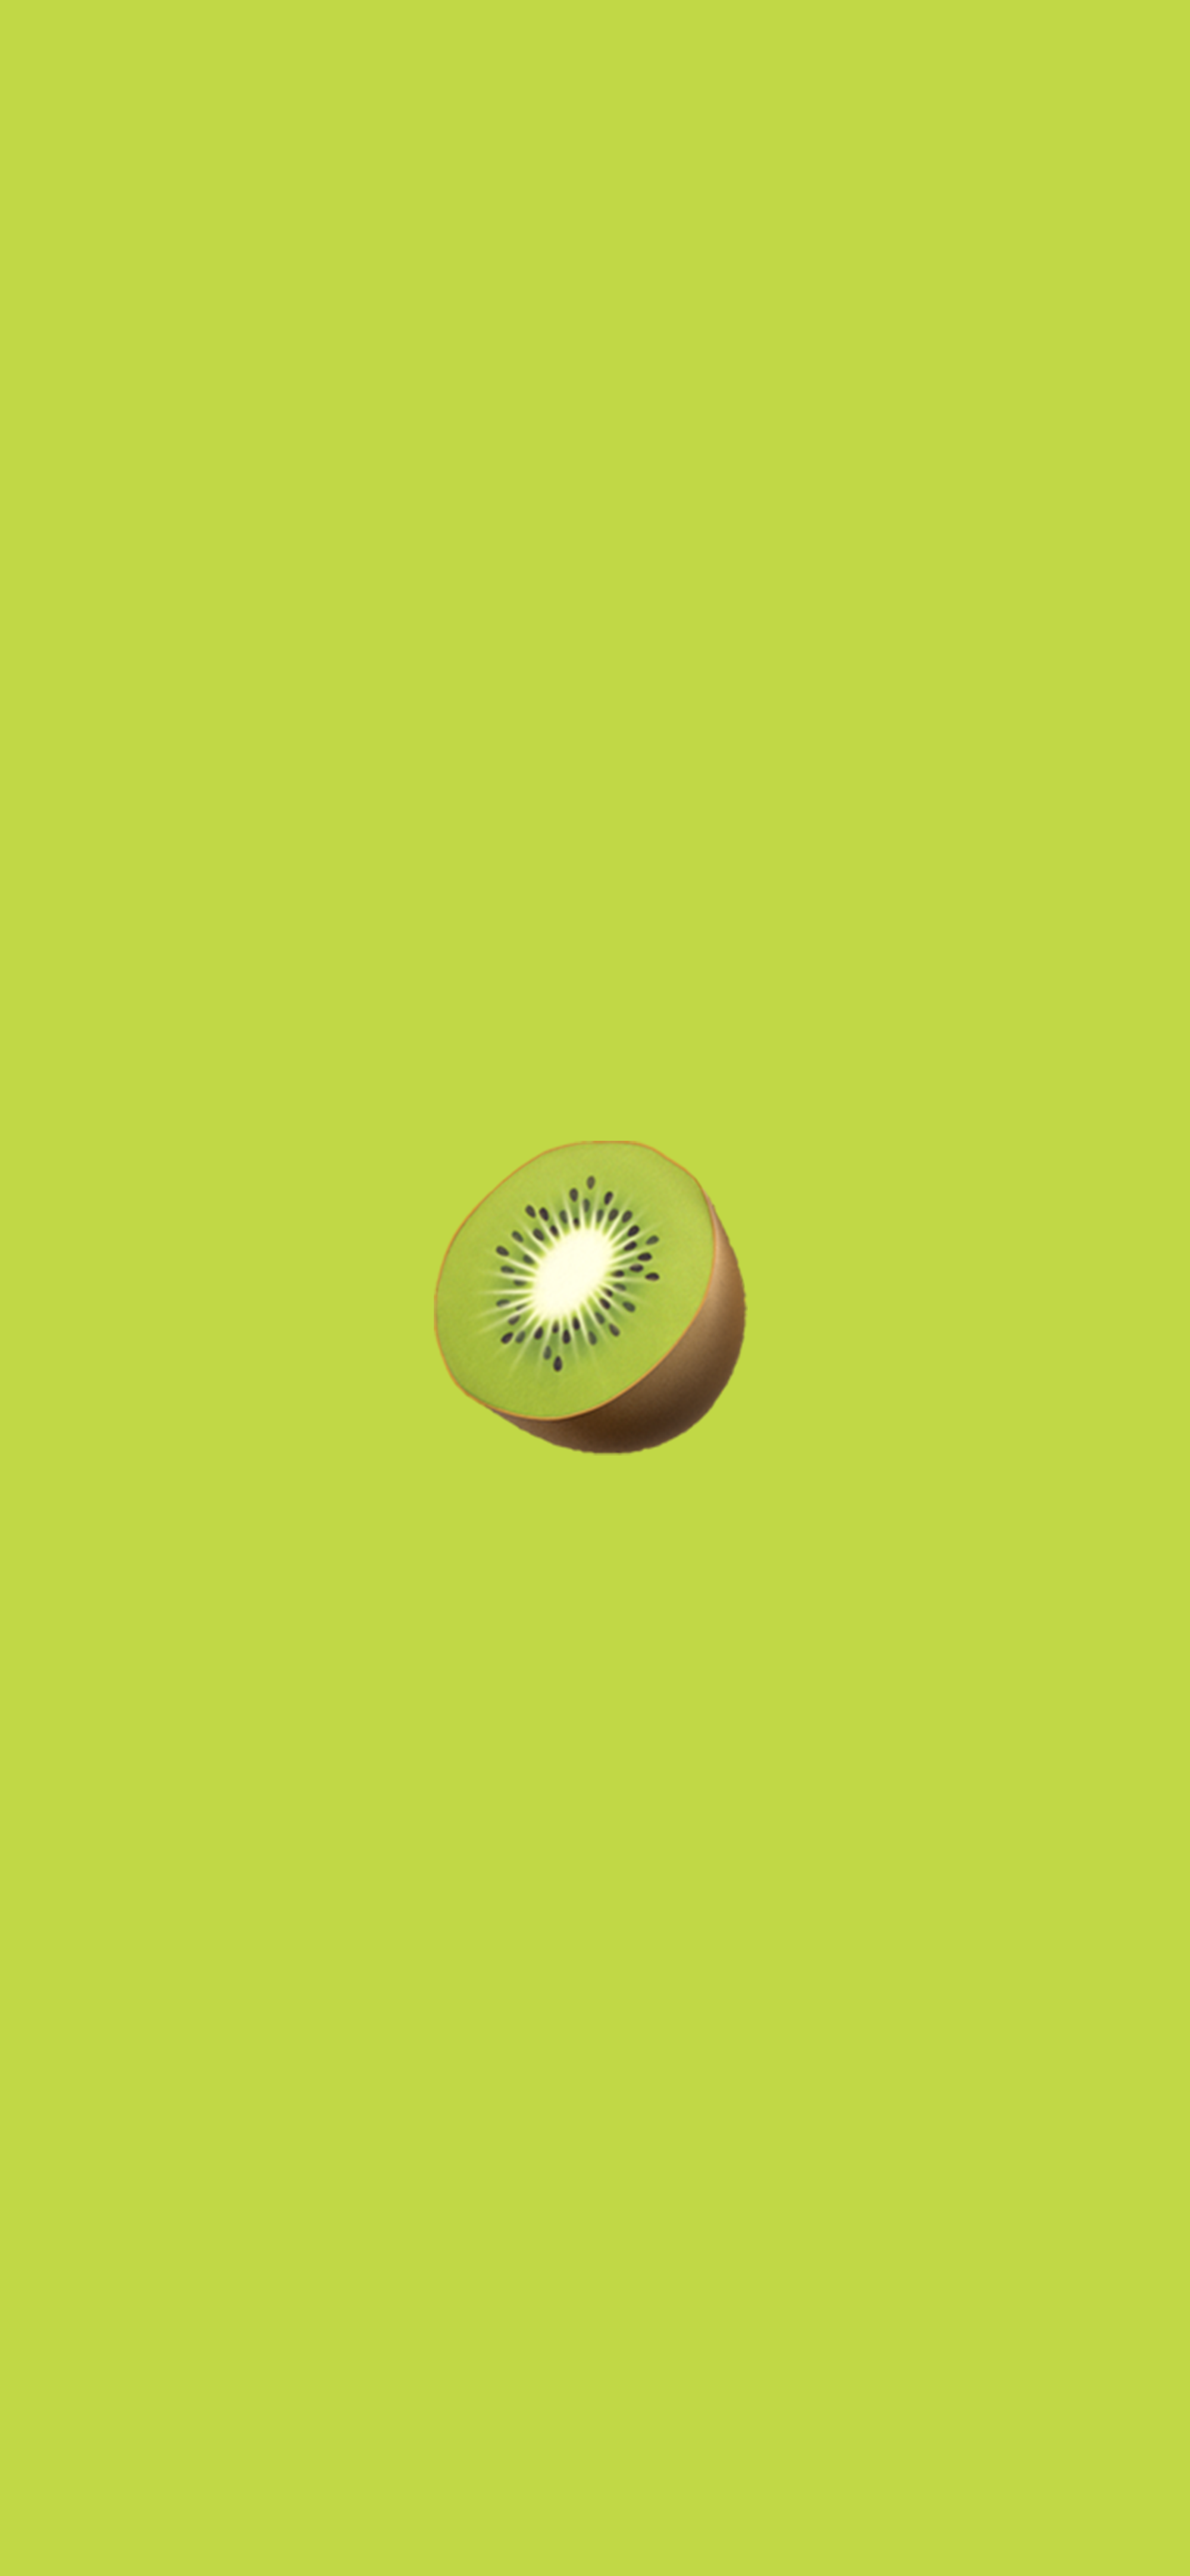 kiwi fruit emoji aesthetic wallpaper